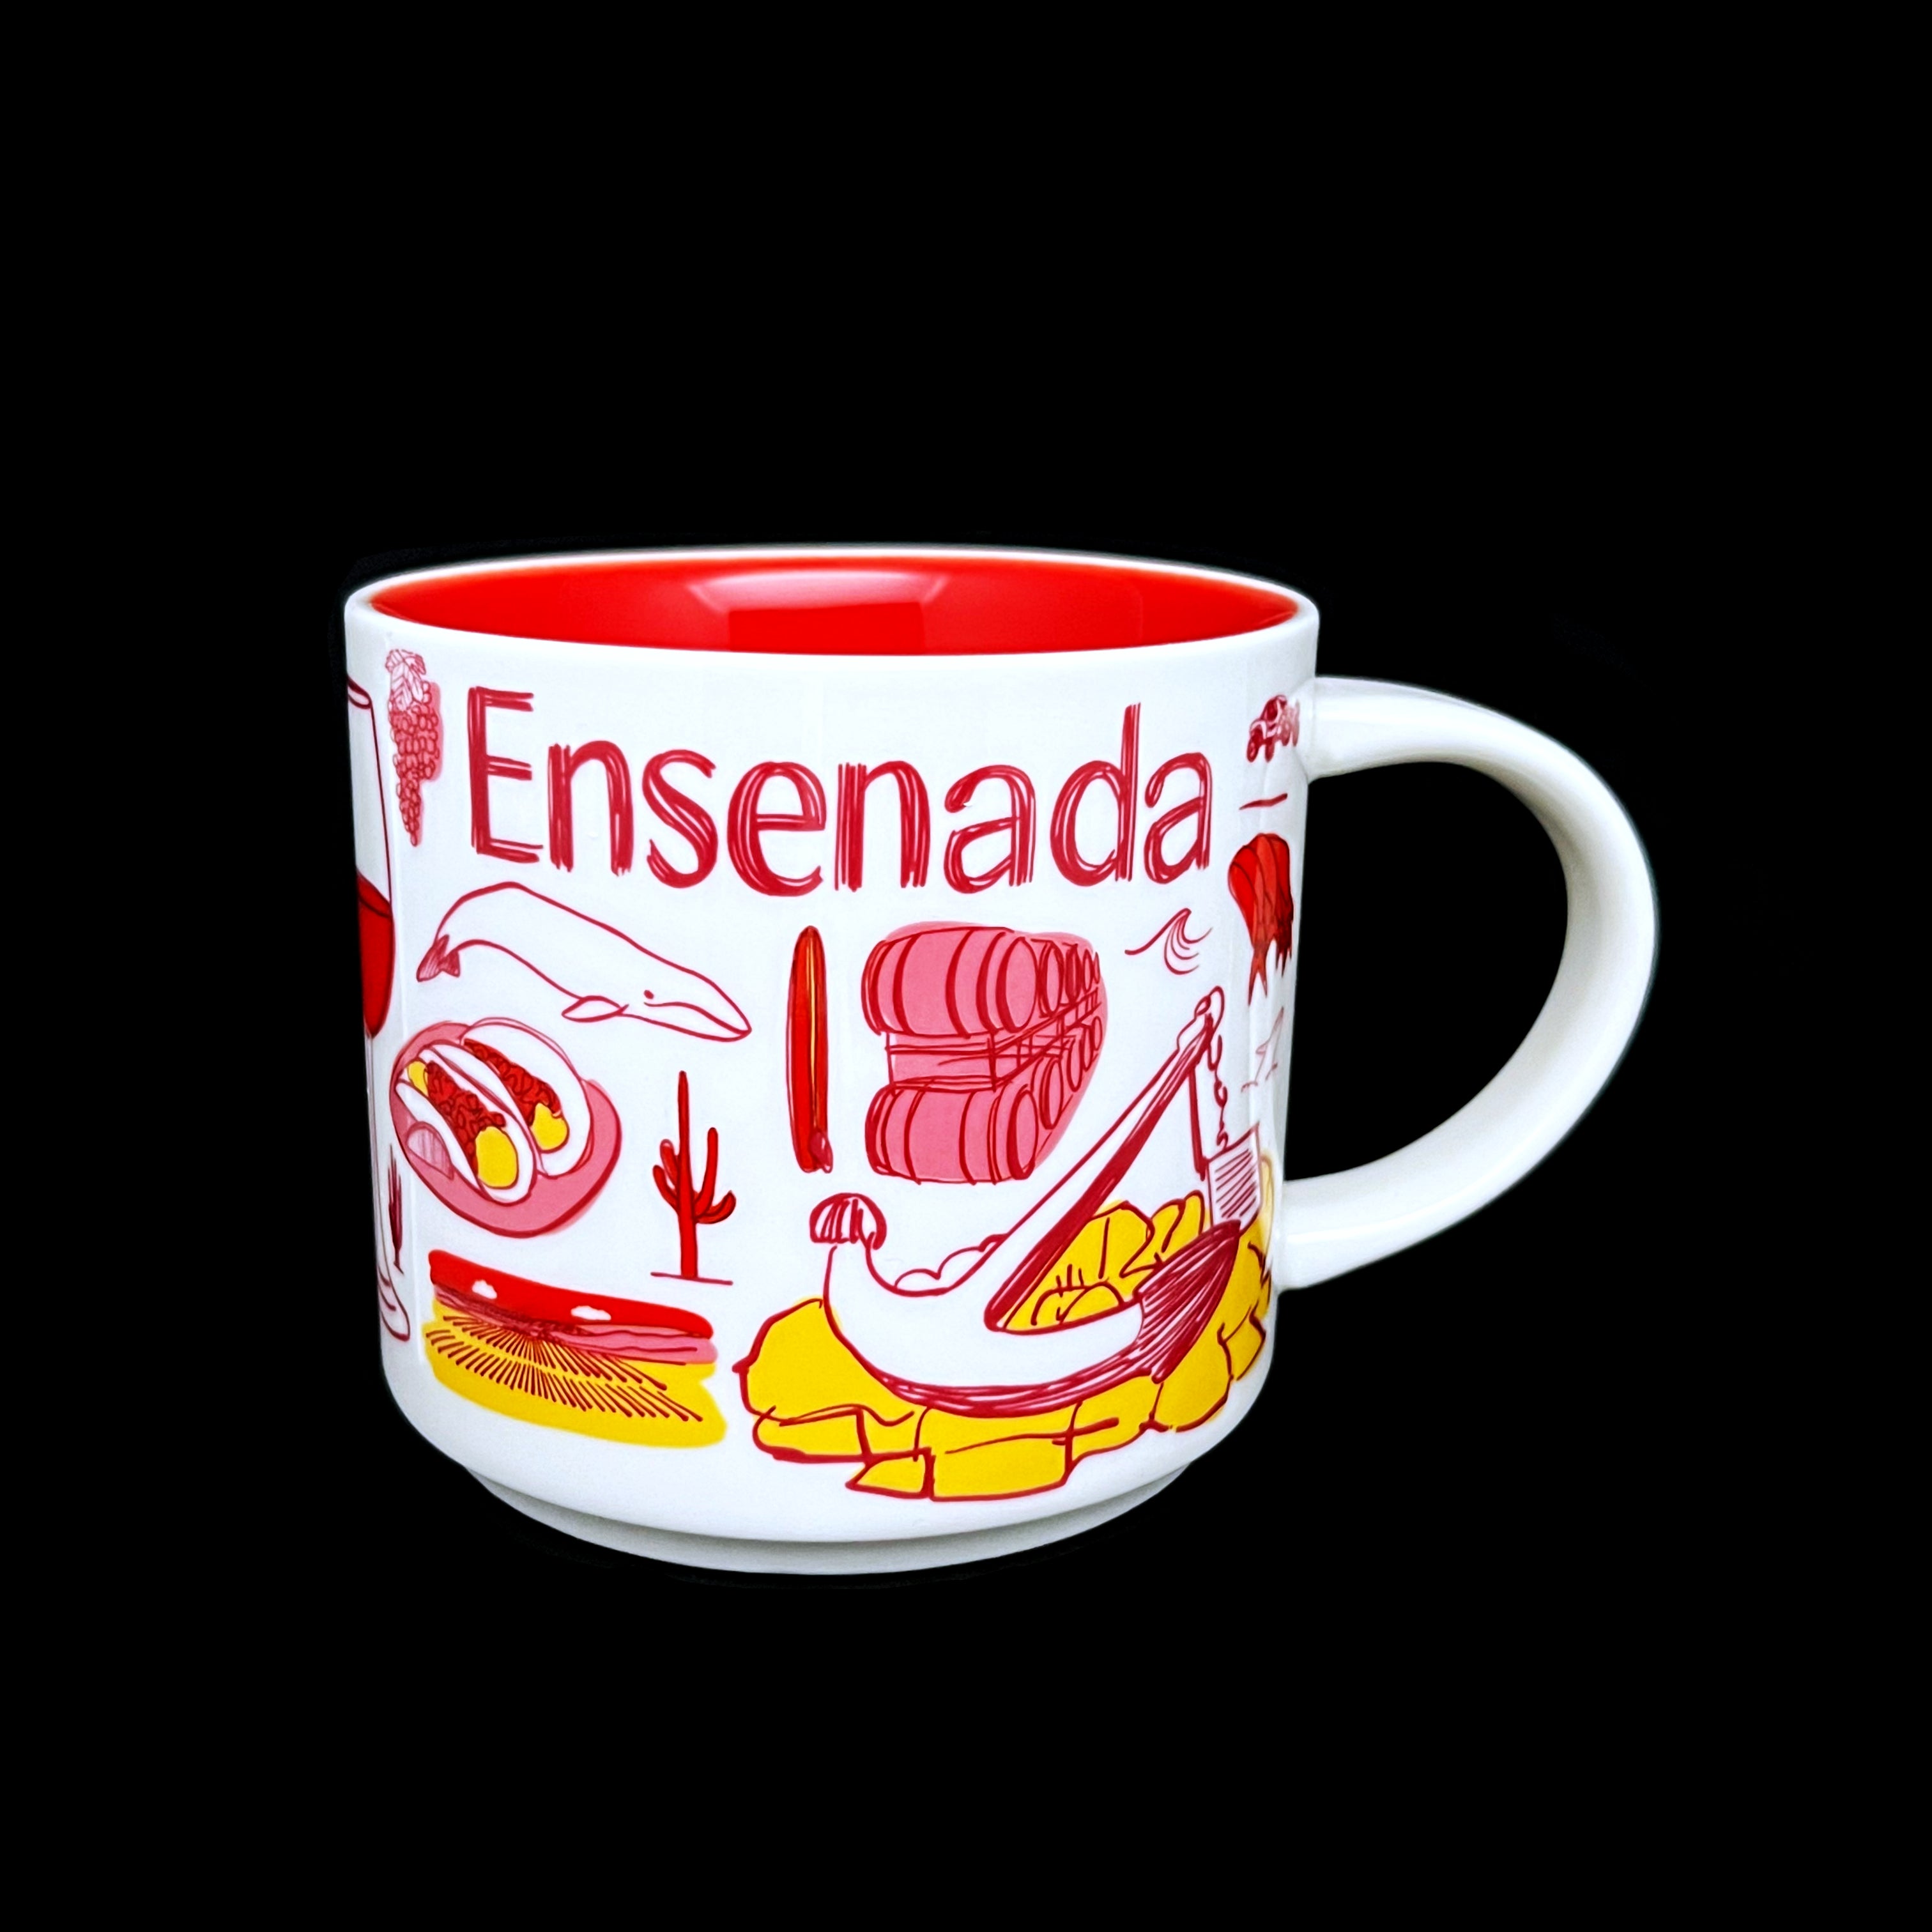 Starbucks Coffee Kaffee Tasse Tee Becher Bilder Motive Collectibles Cup Mug, Ensenada, Mexiko